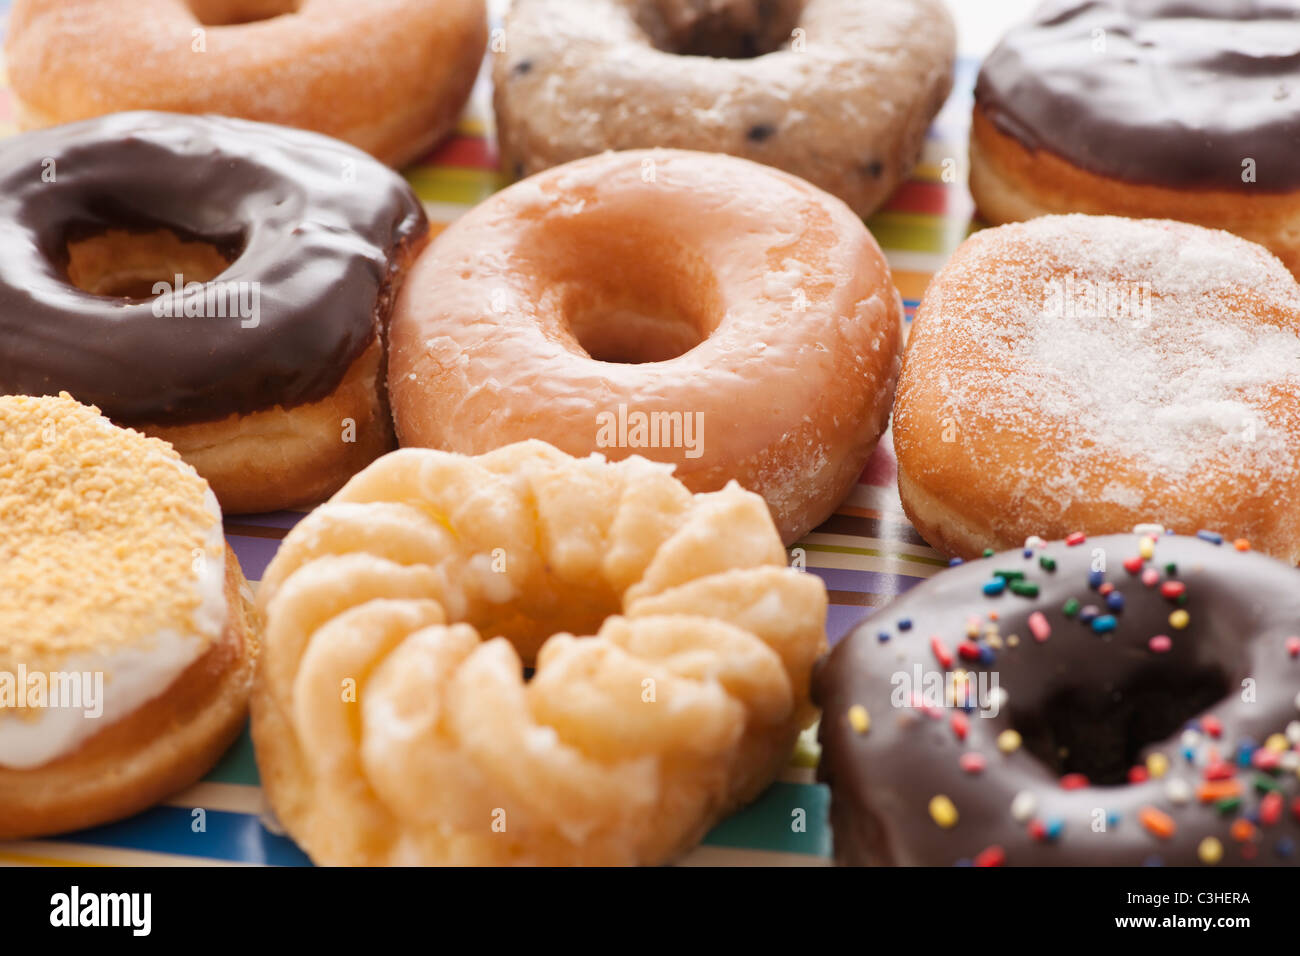 Studio shot of various donuts Stock Photo